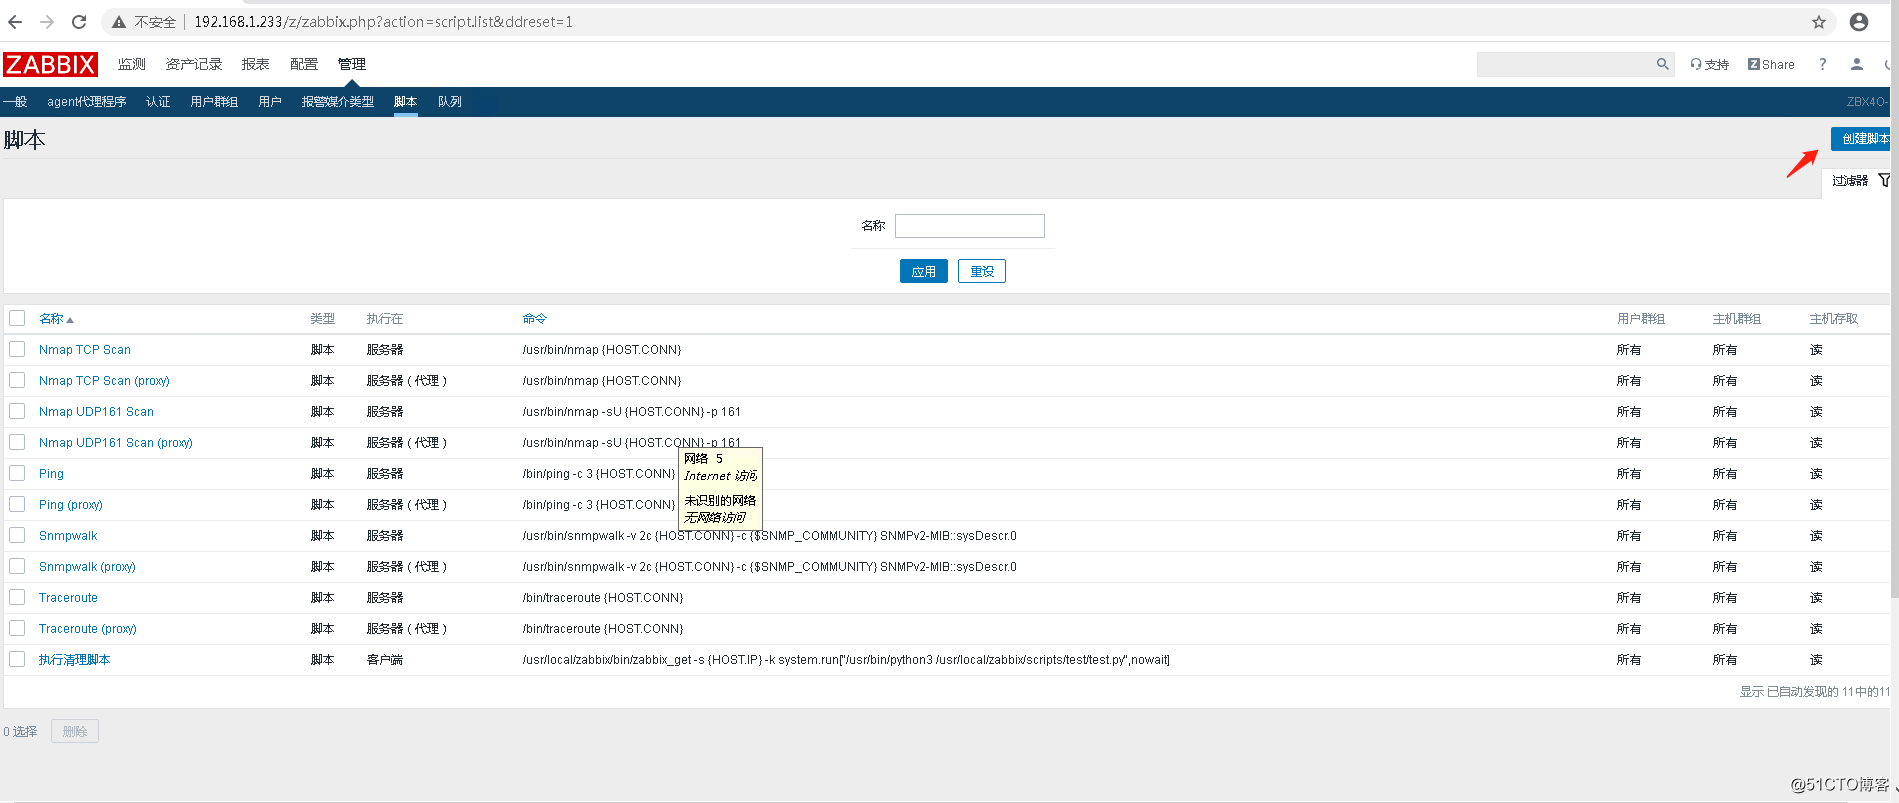 Zabbix combines bat script and scheduled task to open window remote desktop